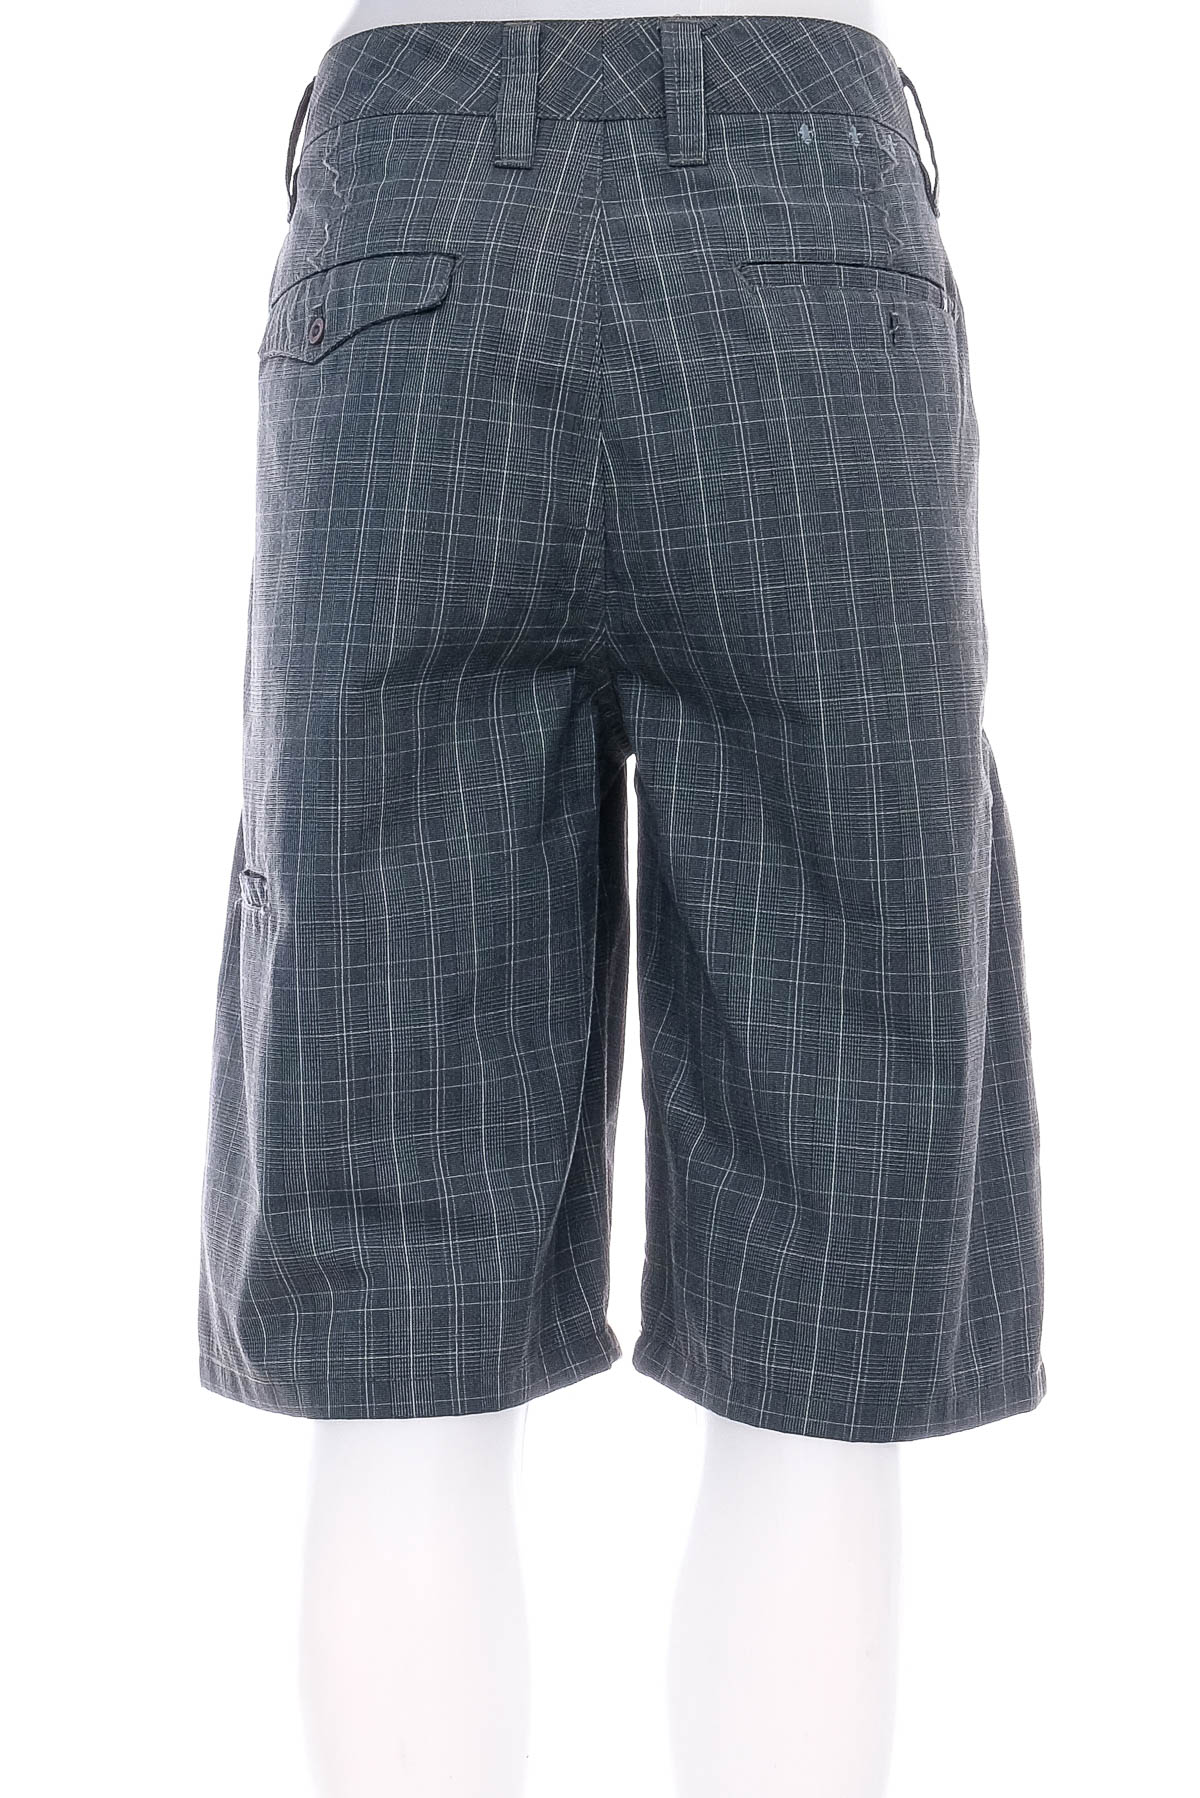 Men's shorts - Hurley - 1